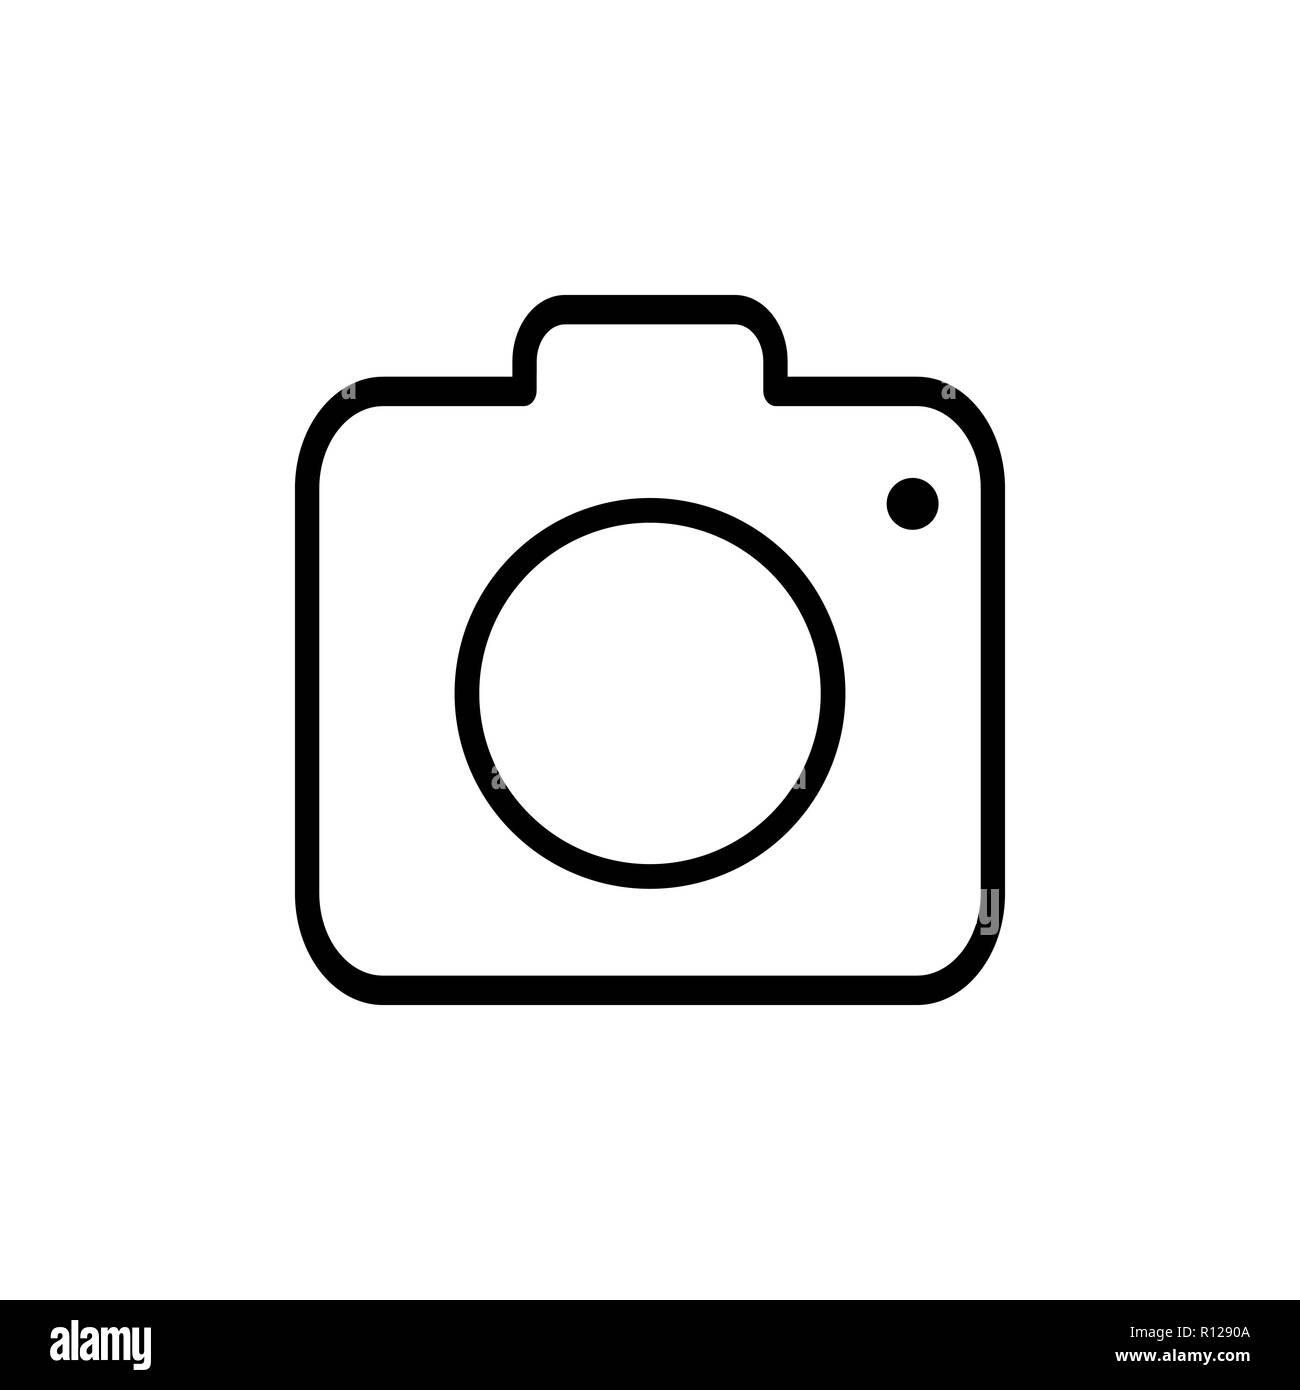 Camera icon. Flat design. Vector illustration. Grey on white background. Stock Vector